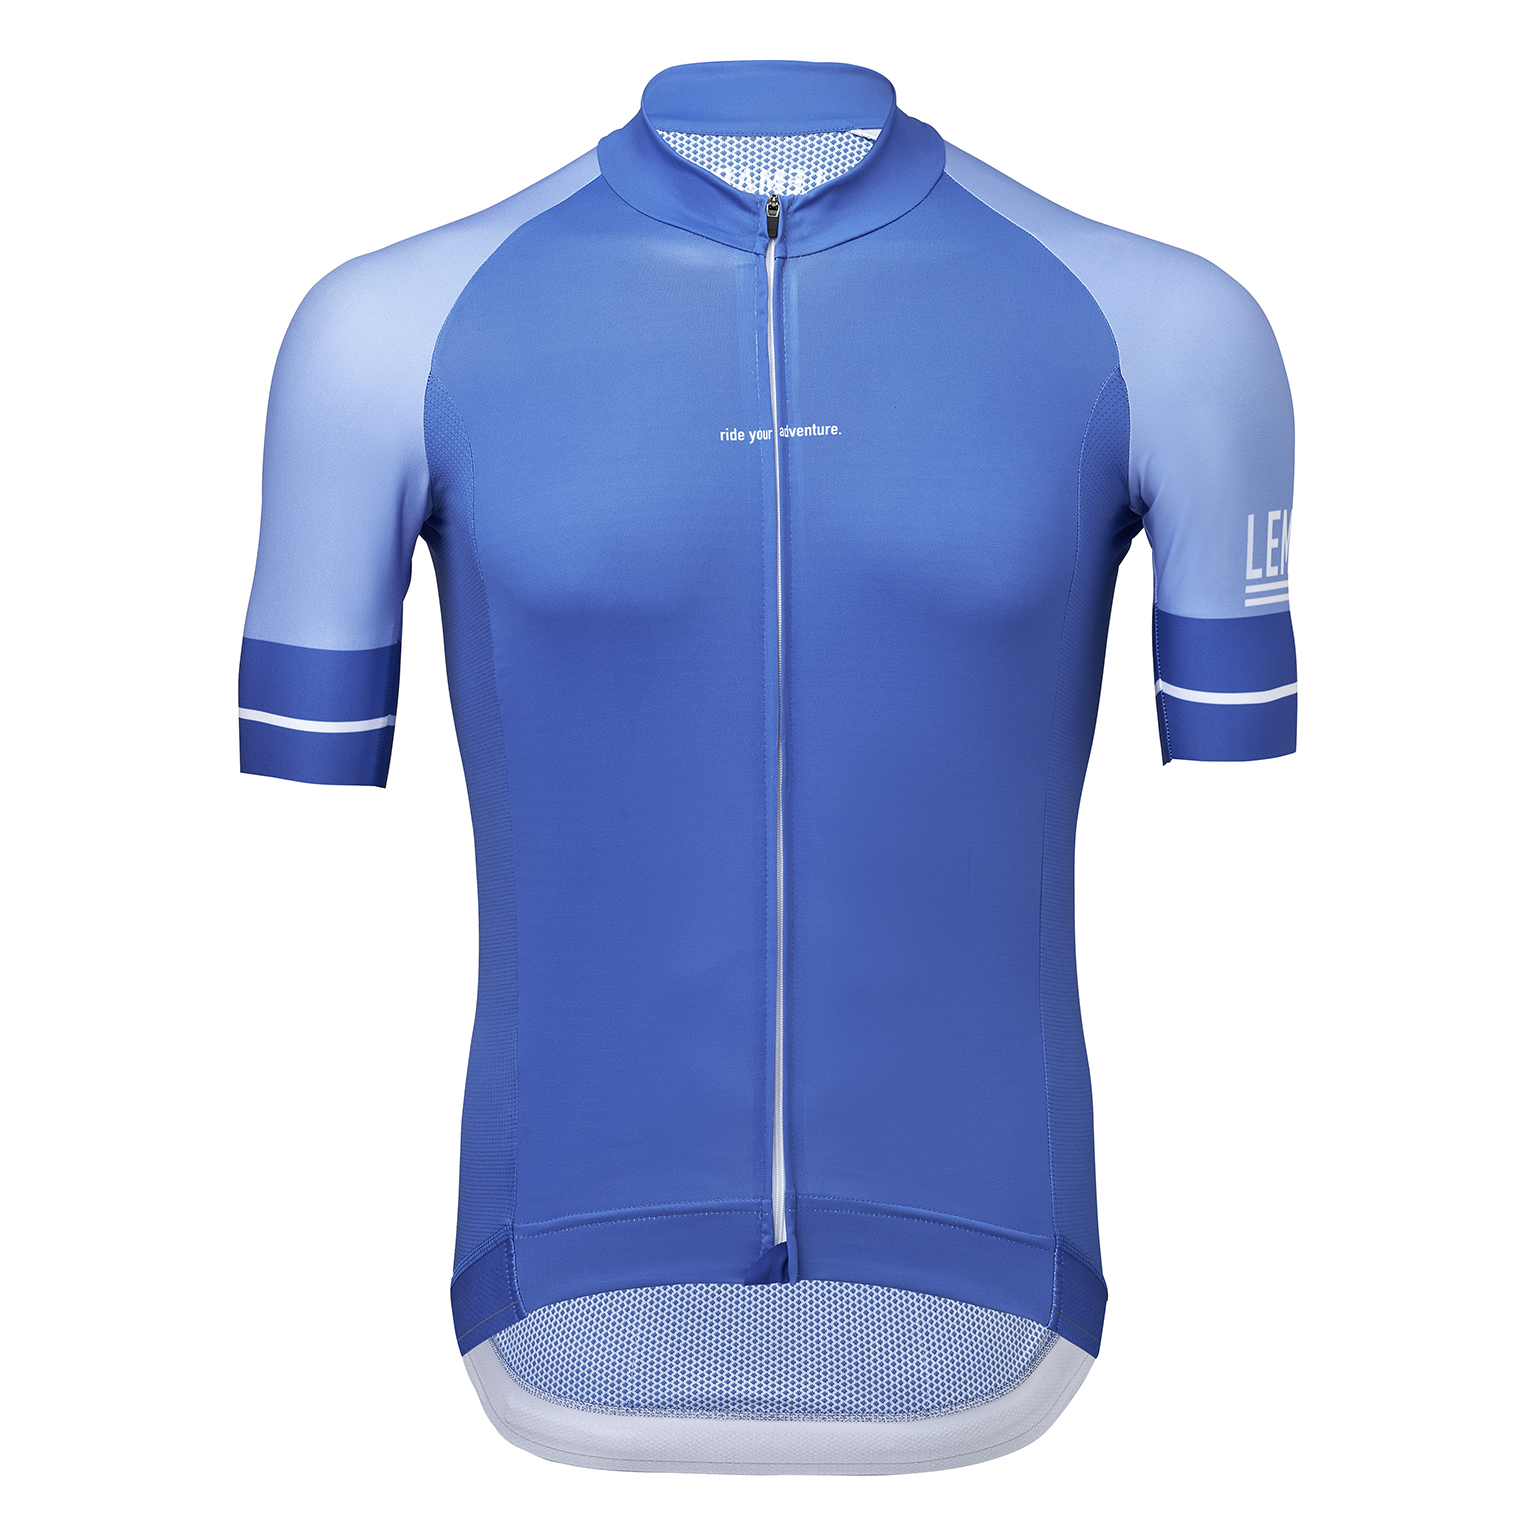 LEMAR cycling apparel – World-class cycling apparel brand